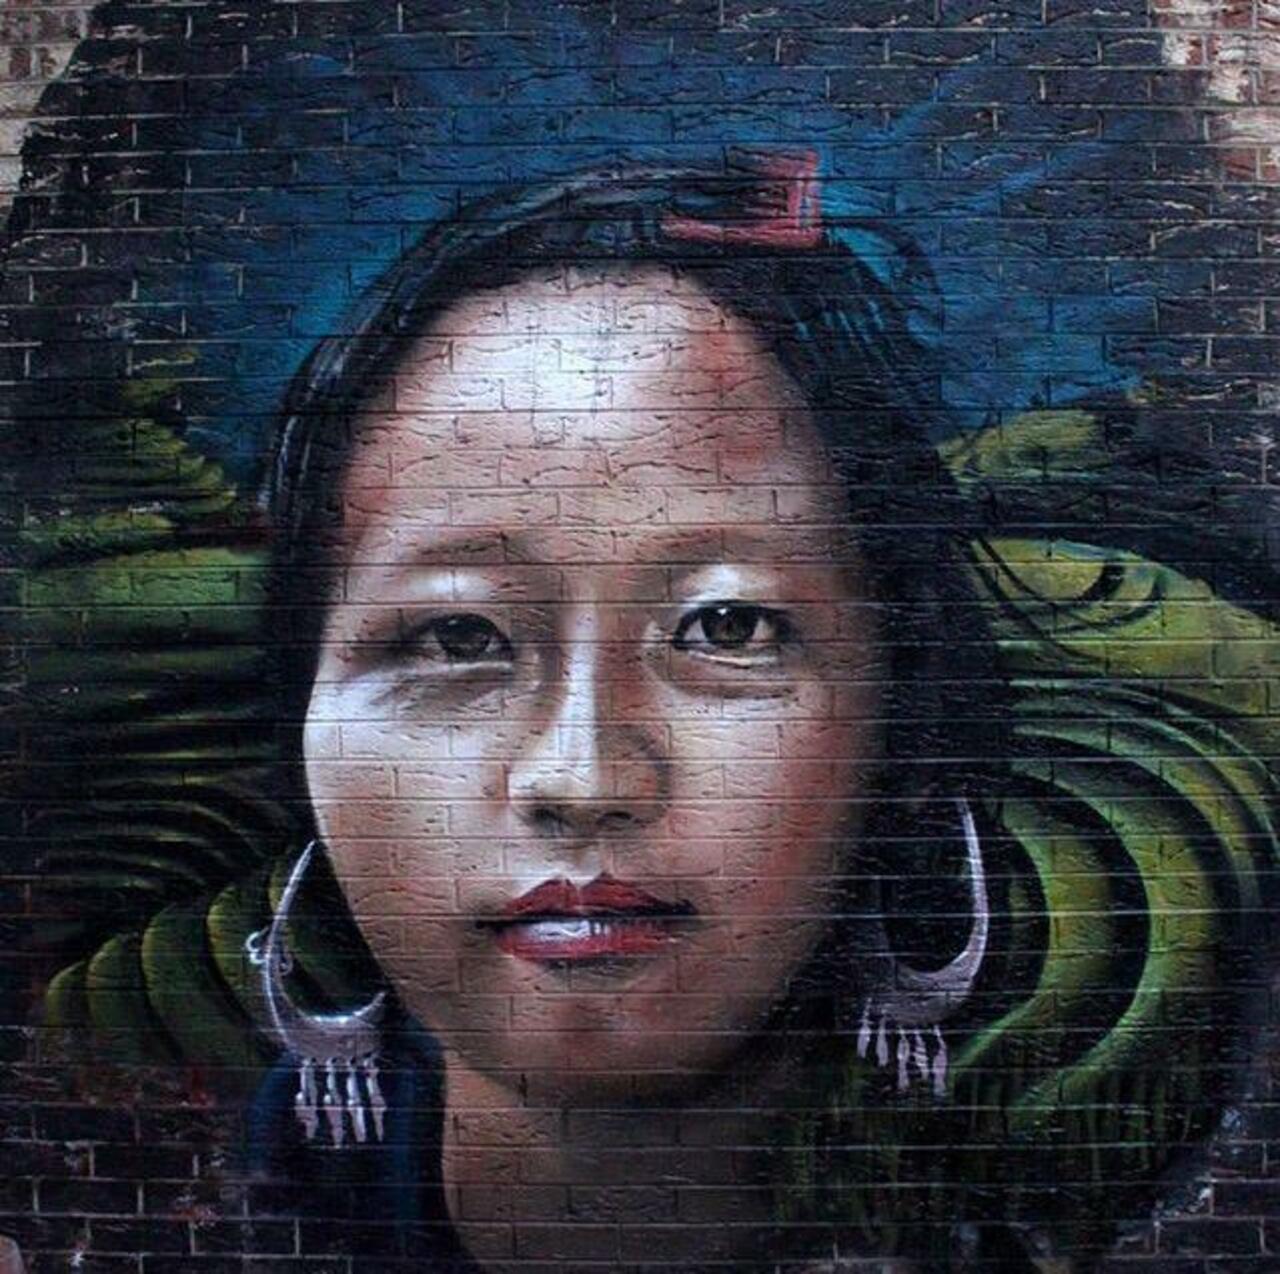 RT belilac "RT belilac "RT belilac "Street Art by cto 

#art #mural #graffiti #streetart http://t.co/jWc6WJ6Yda"""